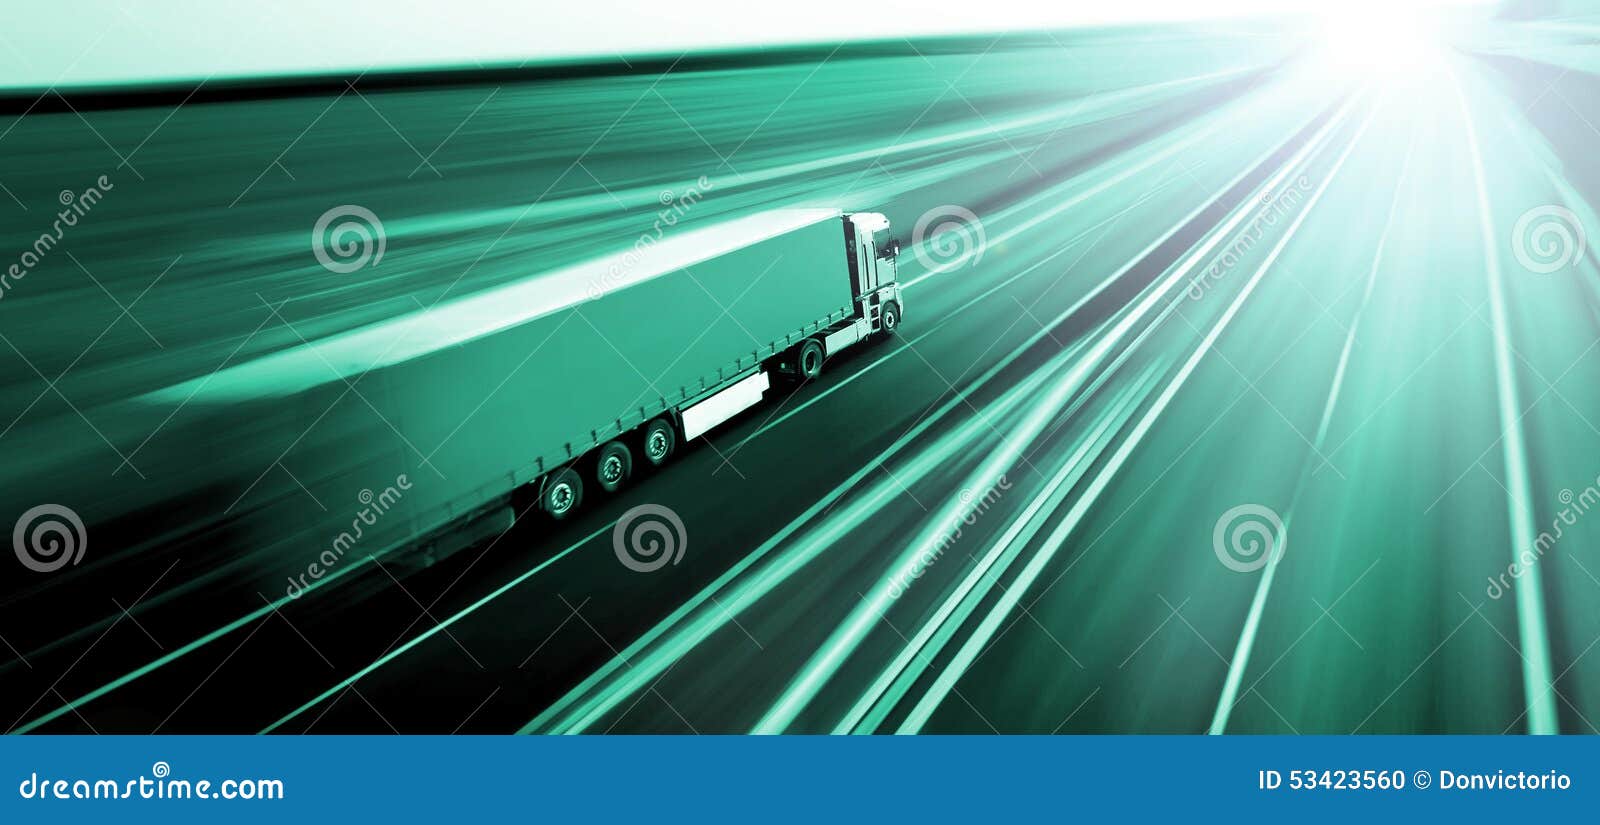 truck on asphalt road motion blur